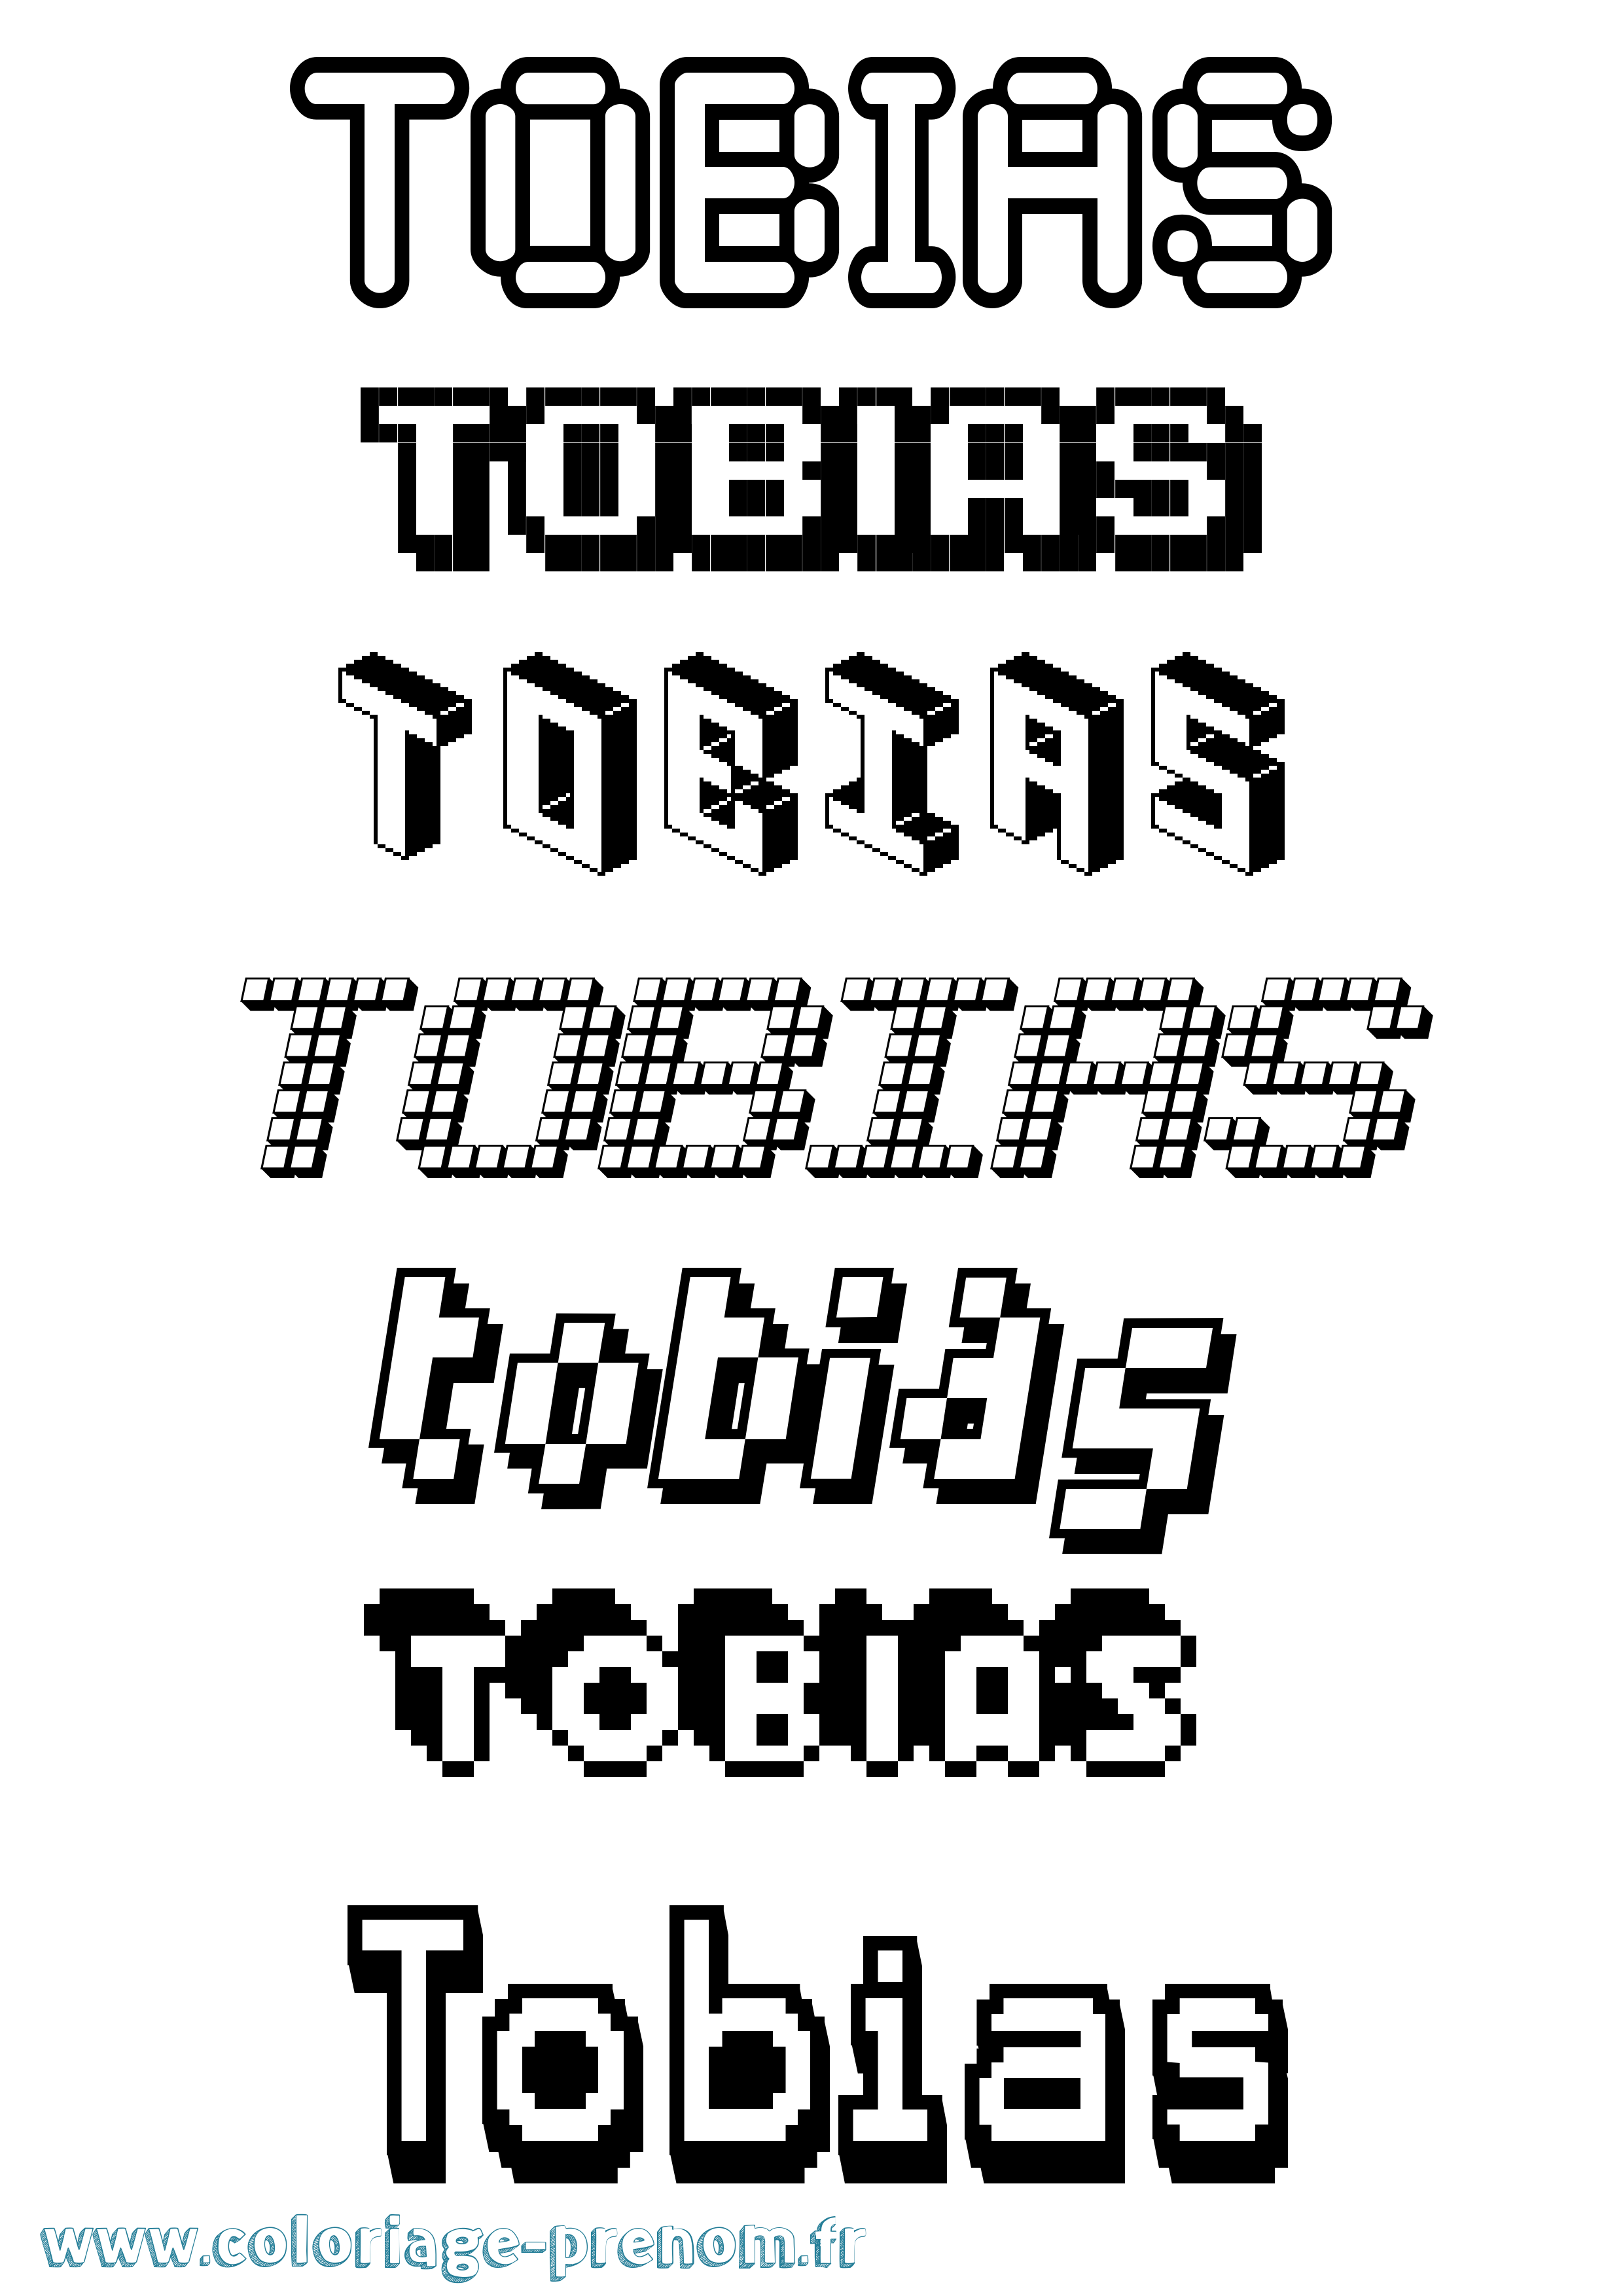 Coloriage prénom Tobias Pixel